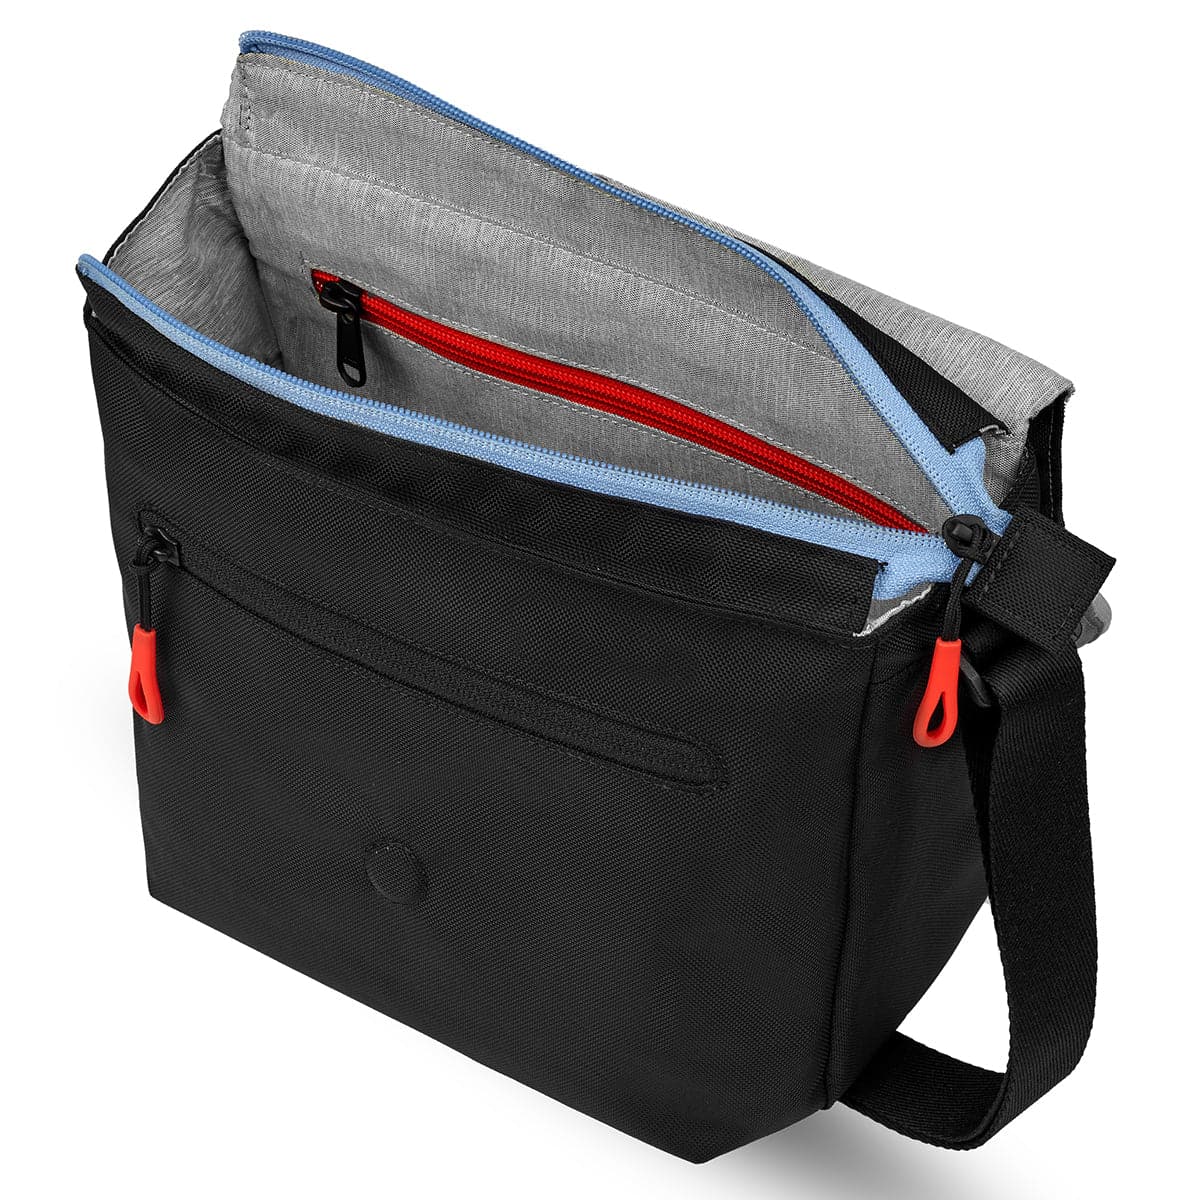 Sherpani Essentials Milli Crossbody Bag